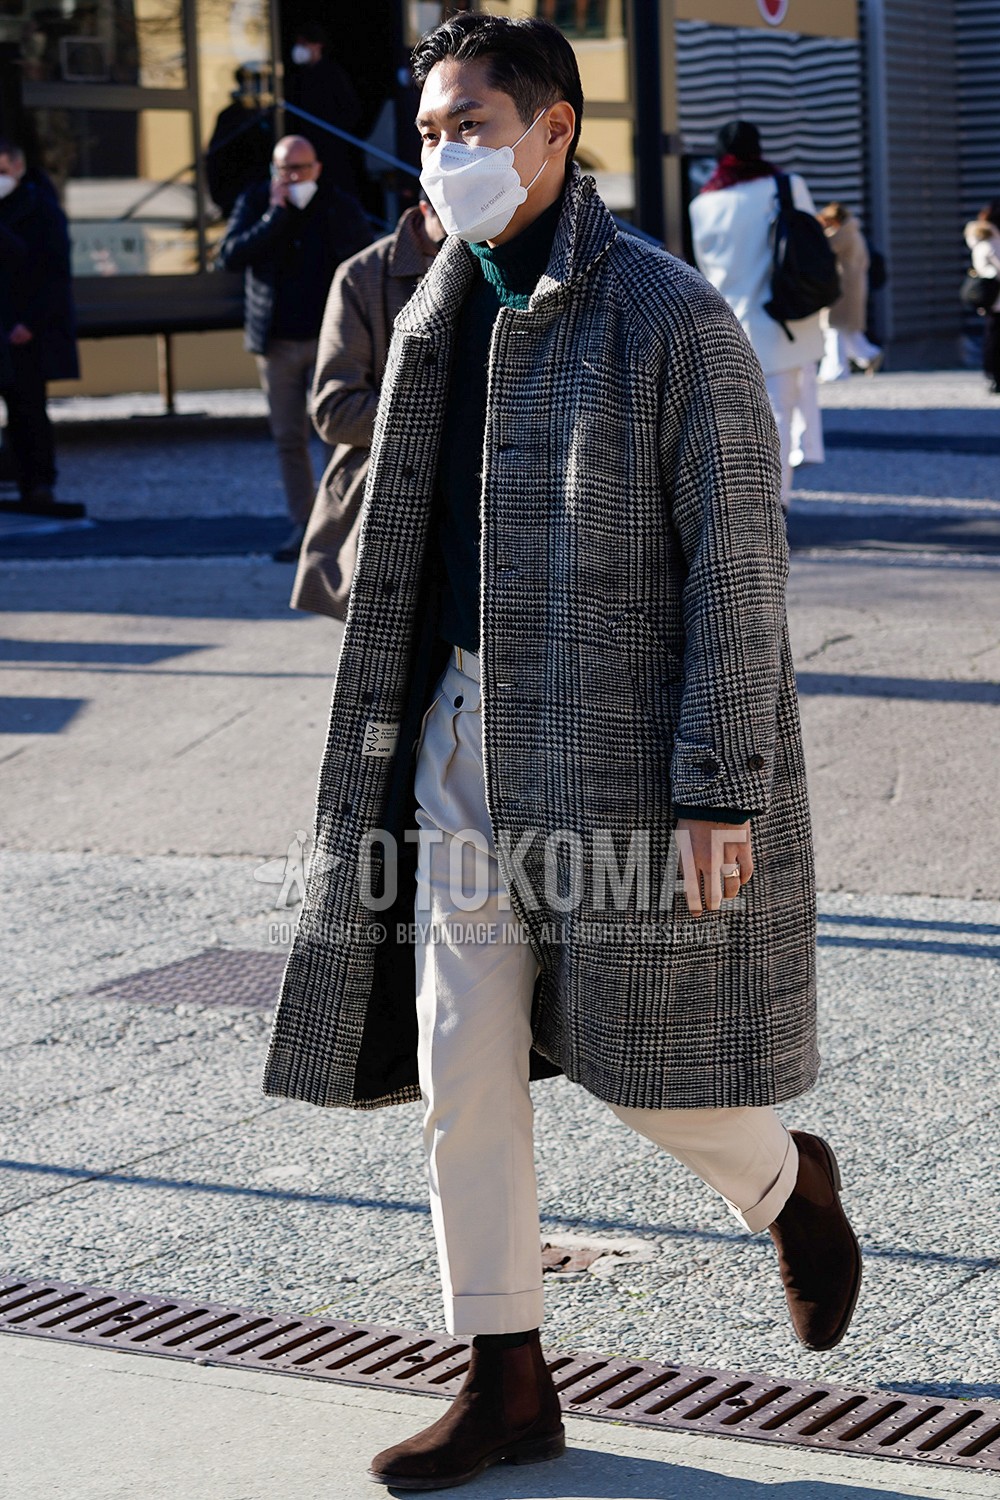 Men's spring winter outfit with gray check stenkarrer coat, green plain turtleneck knit, white plain slacks, brown side-gore boots.